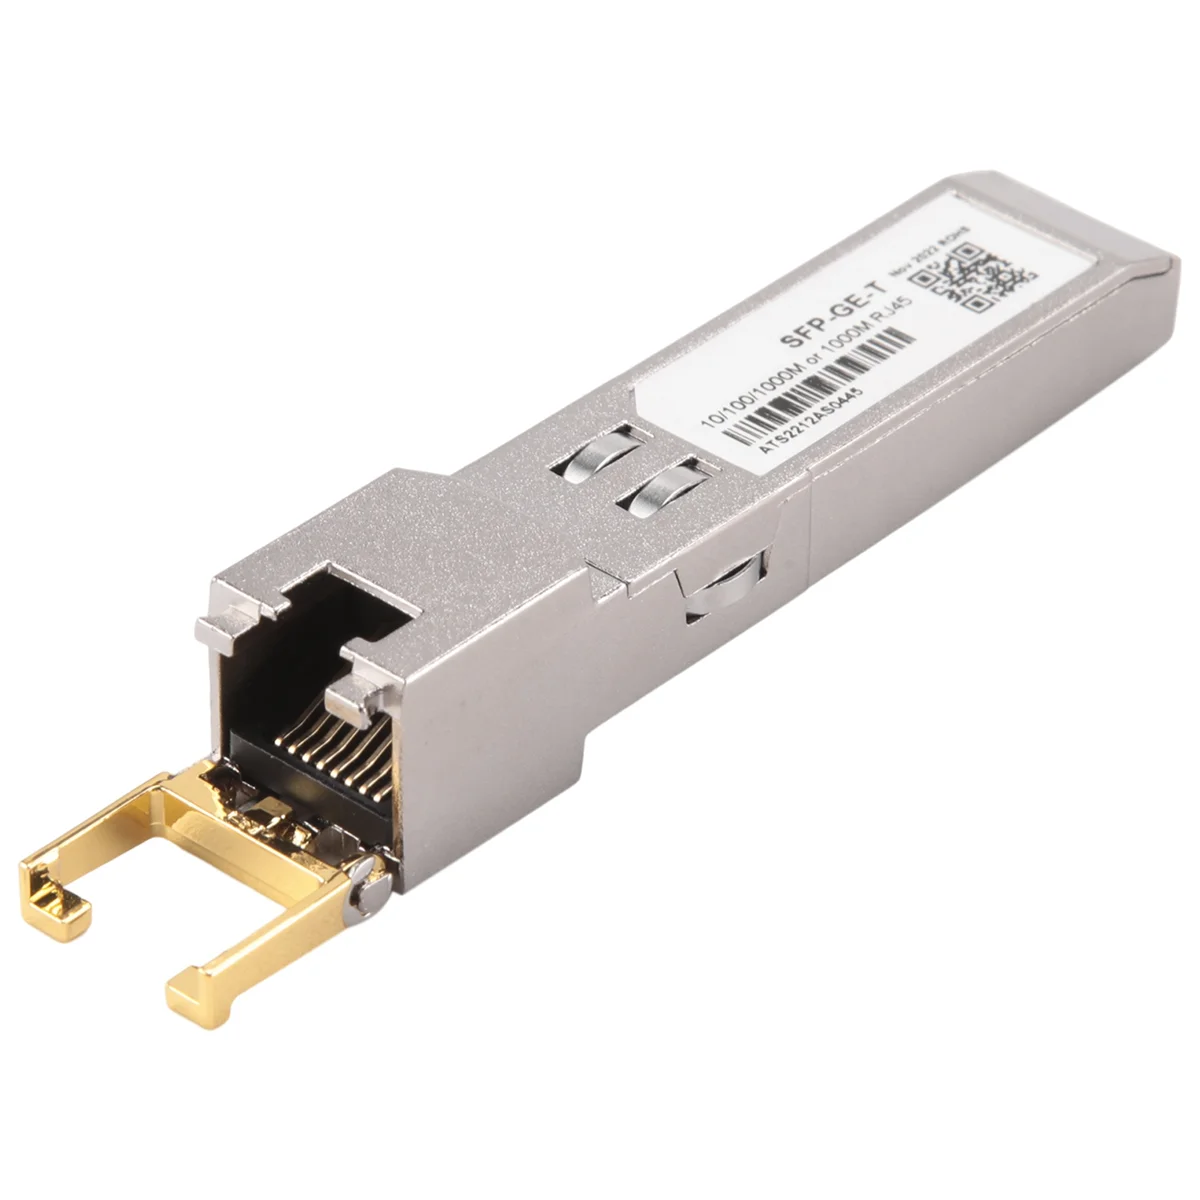 

SFP Module RJ45 Switch Gbic 10/100/1000 Connector SFP Copper RJ45 SFP Module Gigabit Ethernet Port